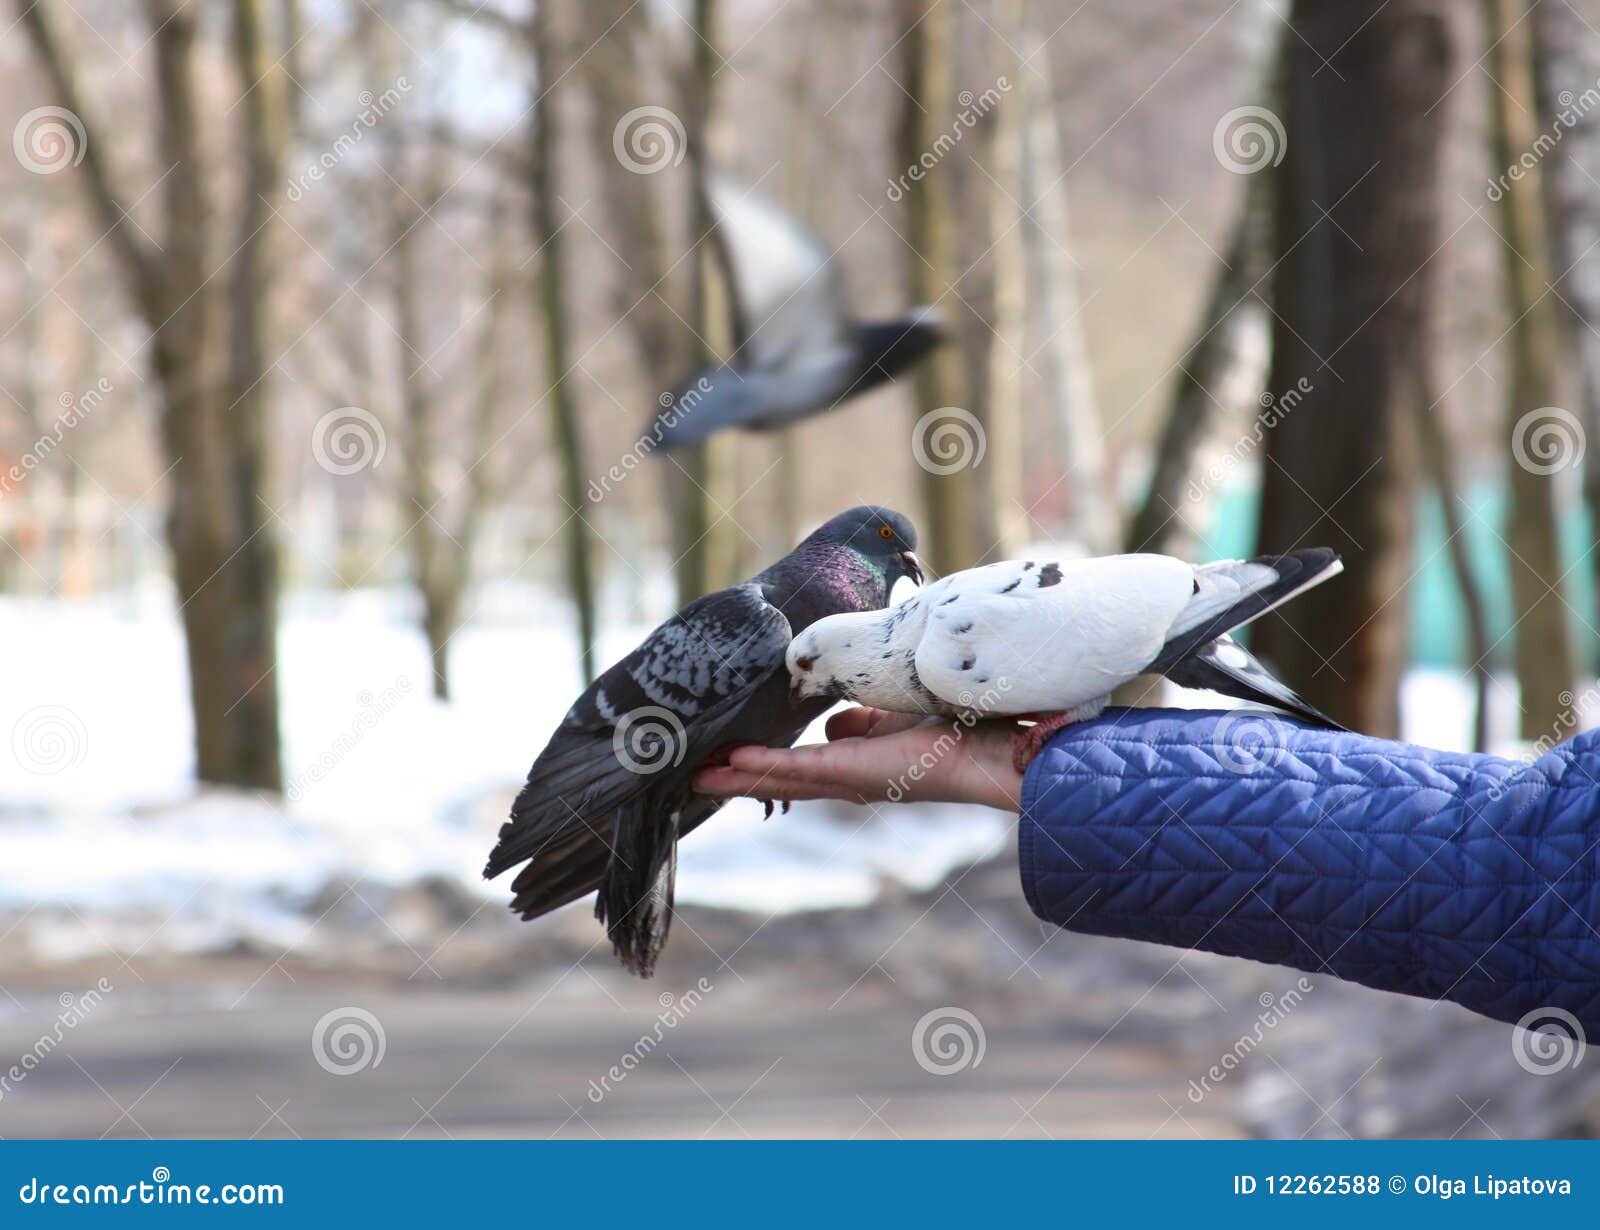 Doves feeding in hand stock photo. Image of scene, beak